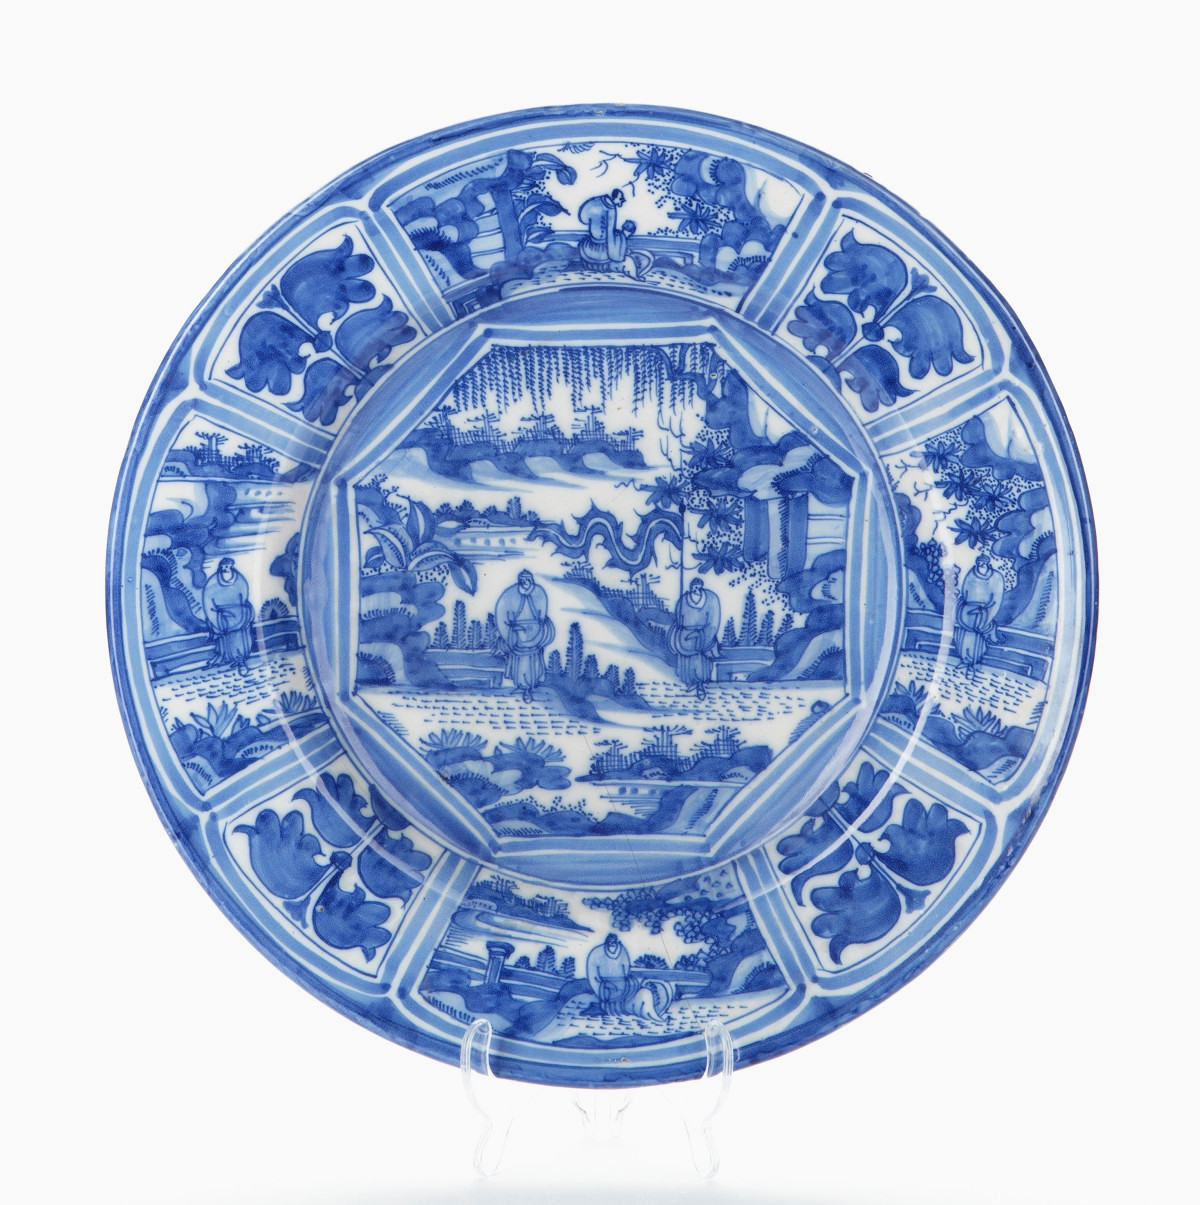 Chinoiserie porcelain from Frankfurt c. 1700